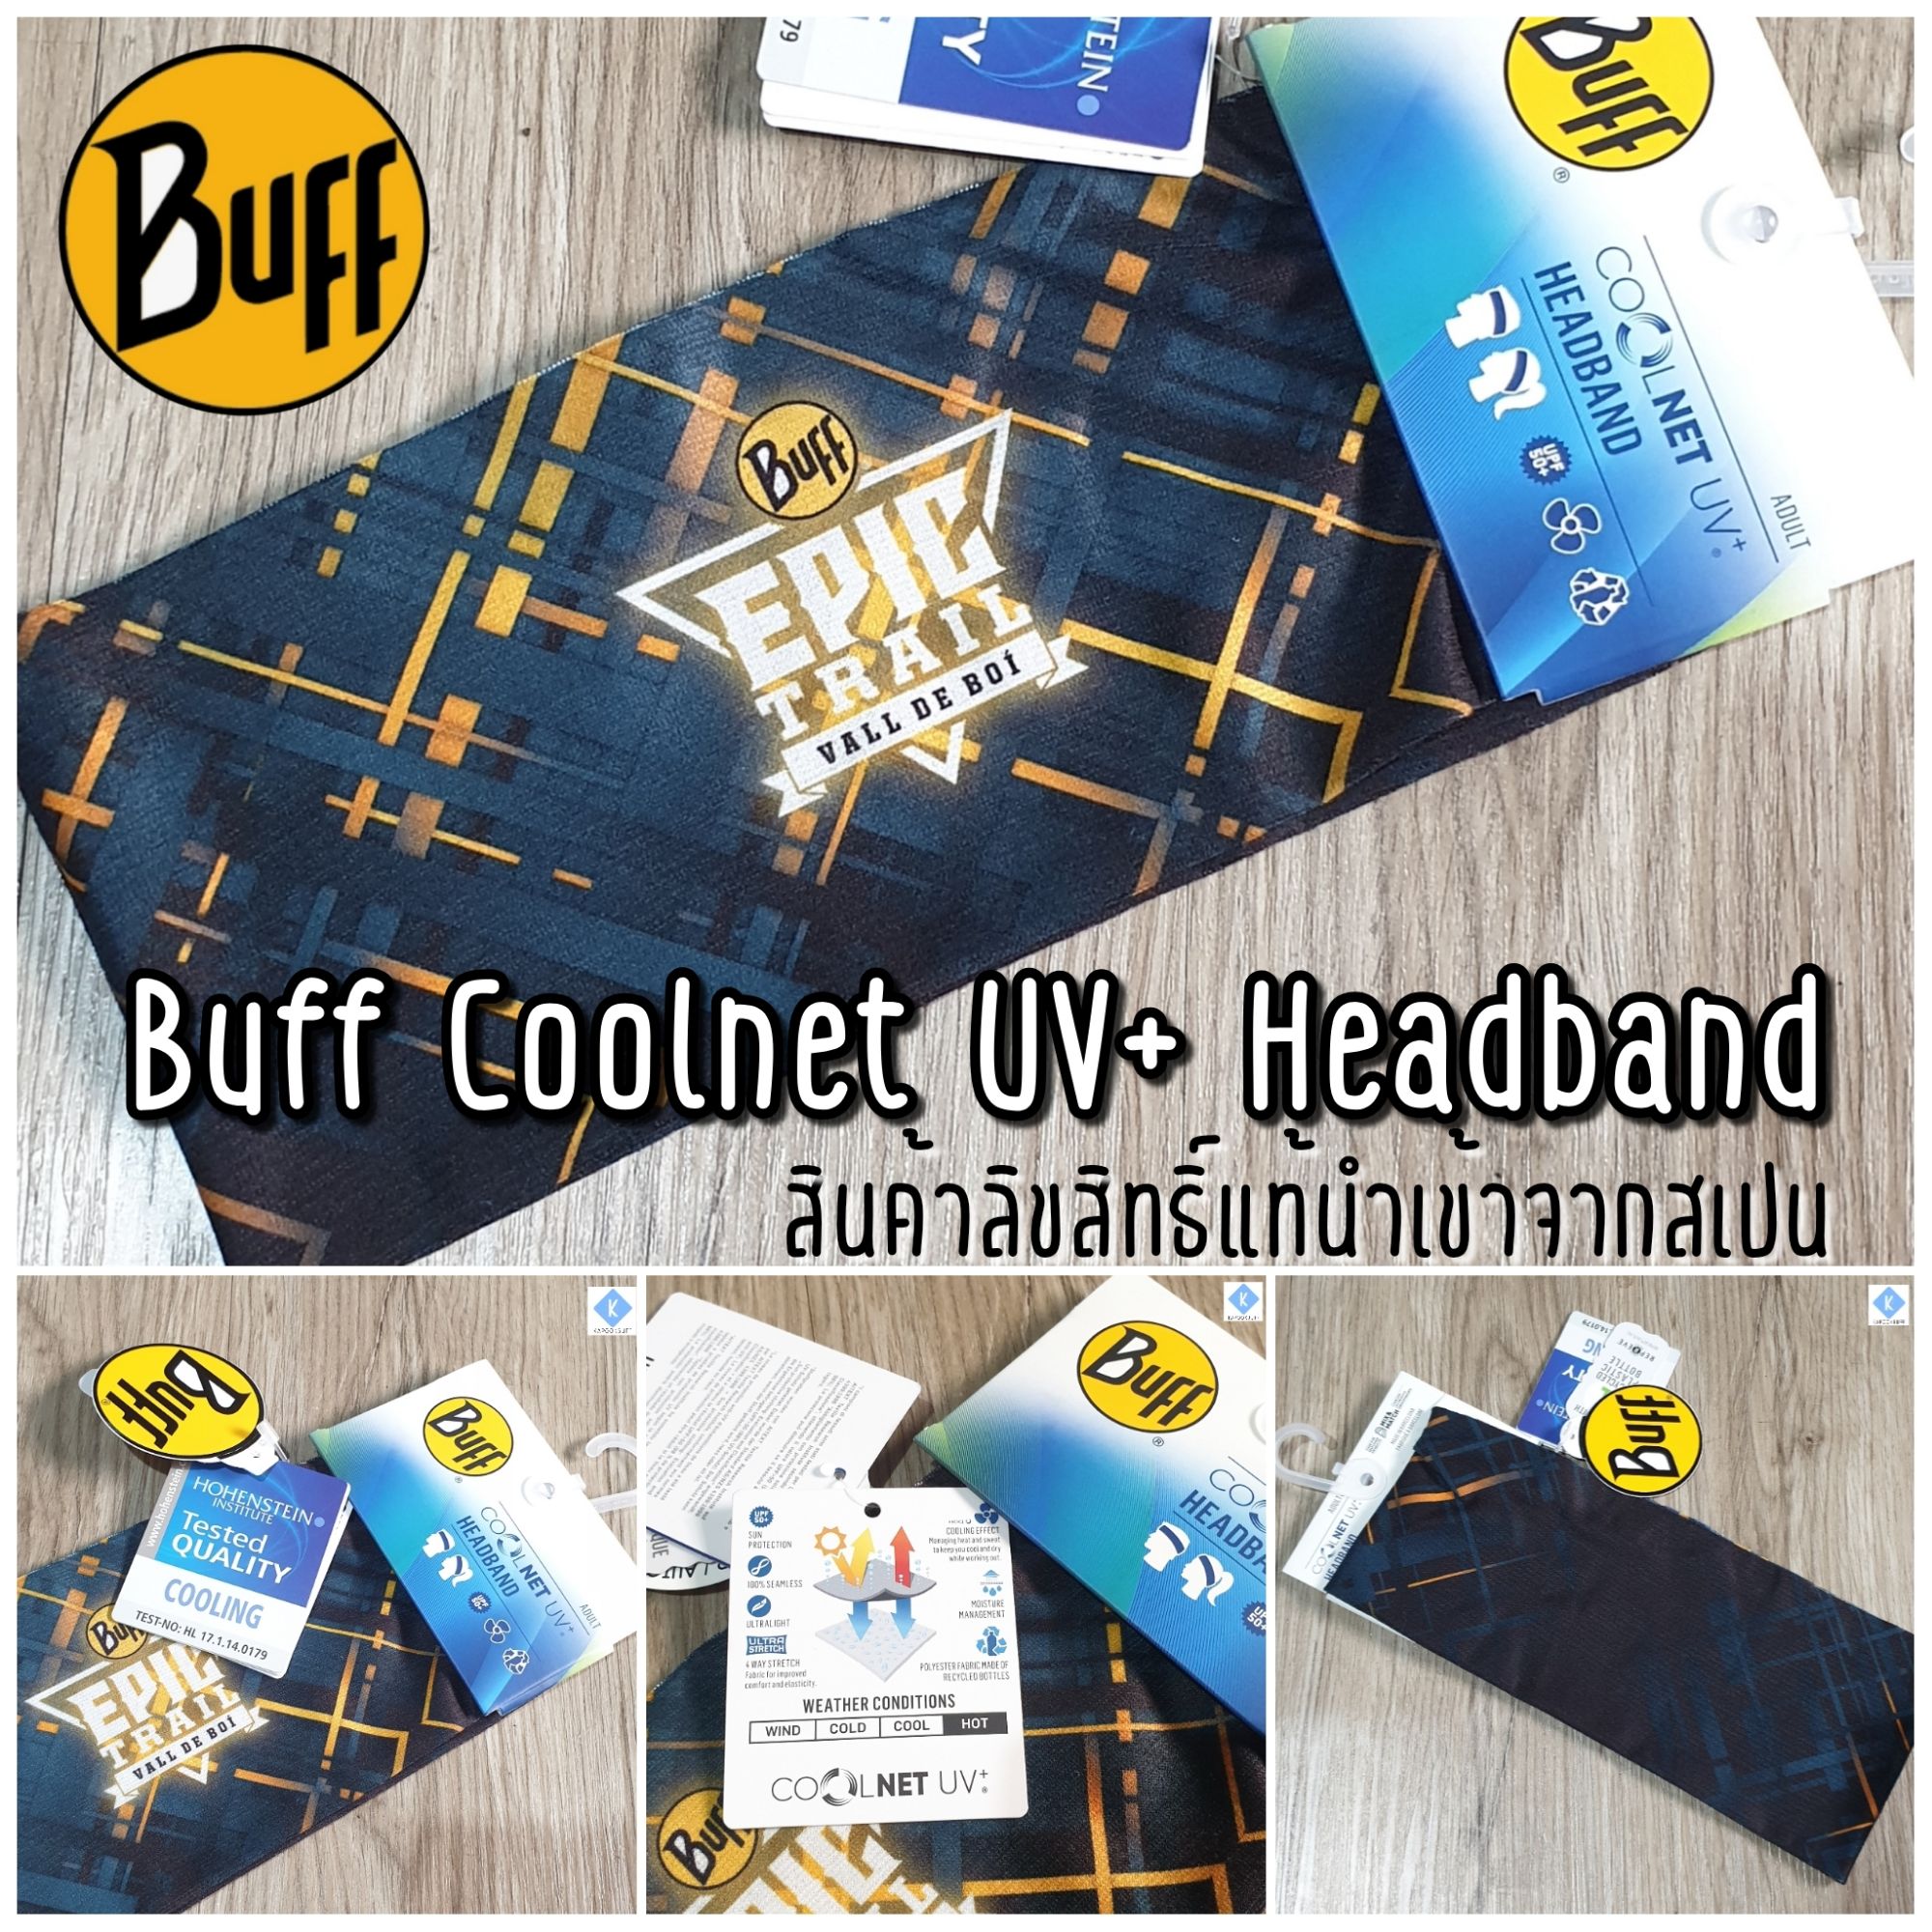 BUFF Coolnet UV+Headband